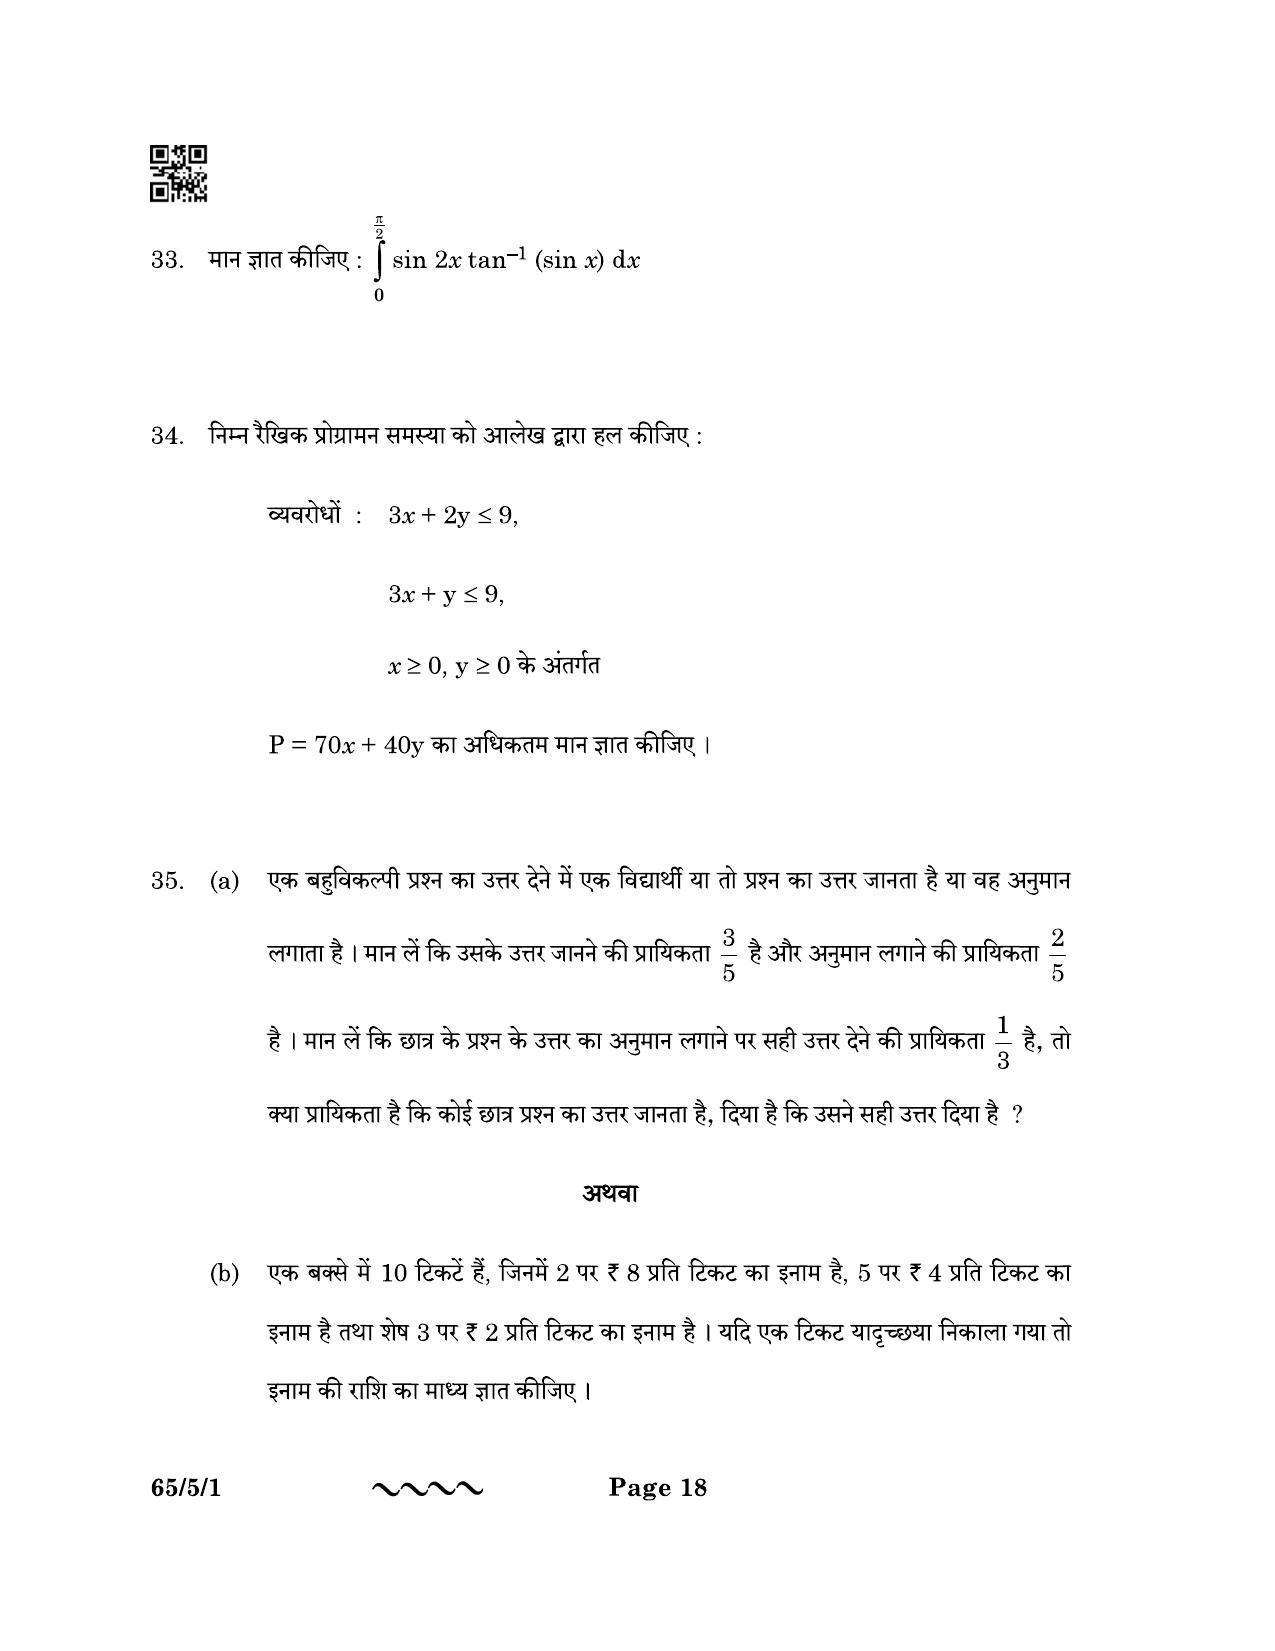 CBSE Class 12 65-5-1 MATHEMATICS 2023 Question Paper - Page 18